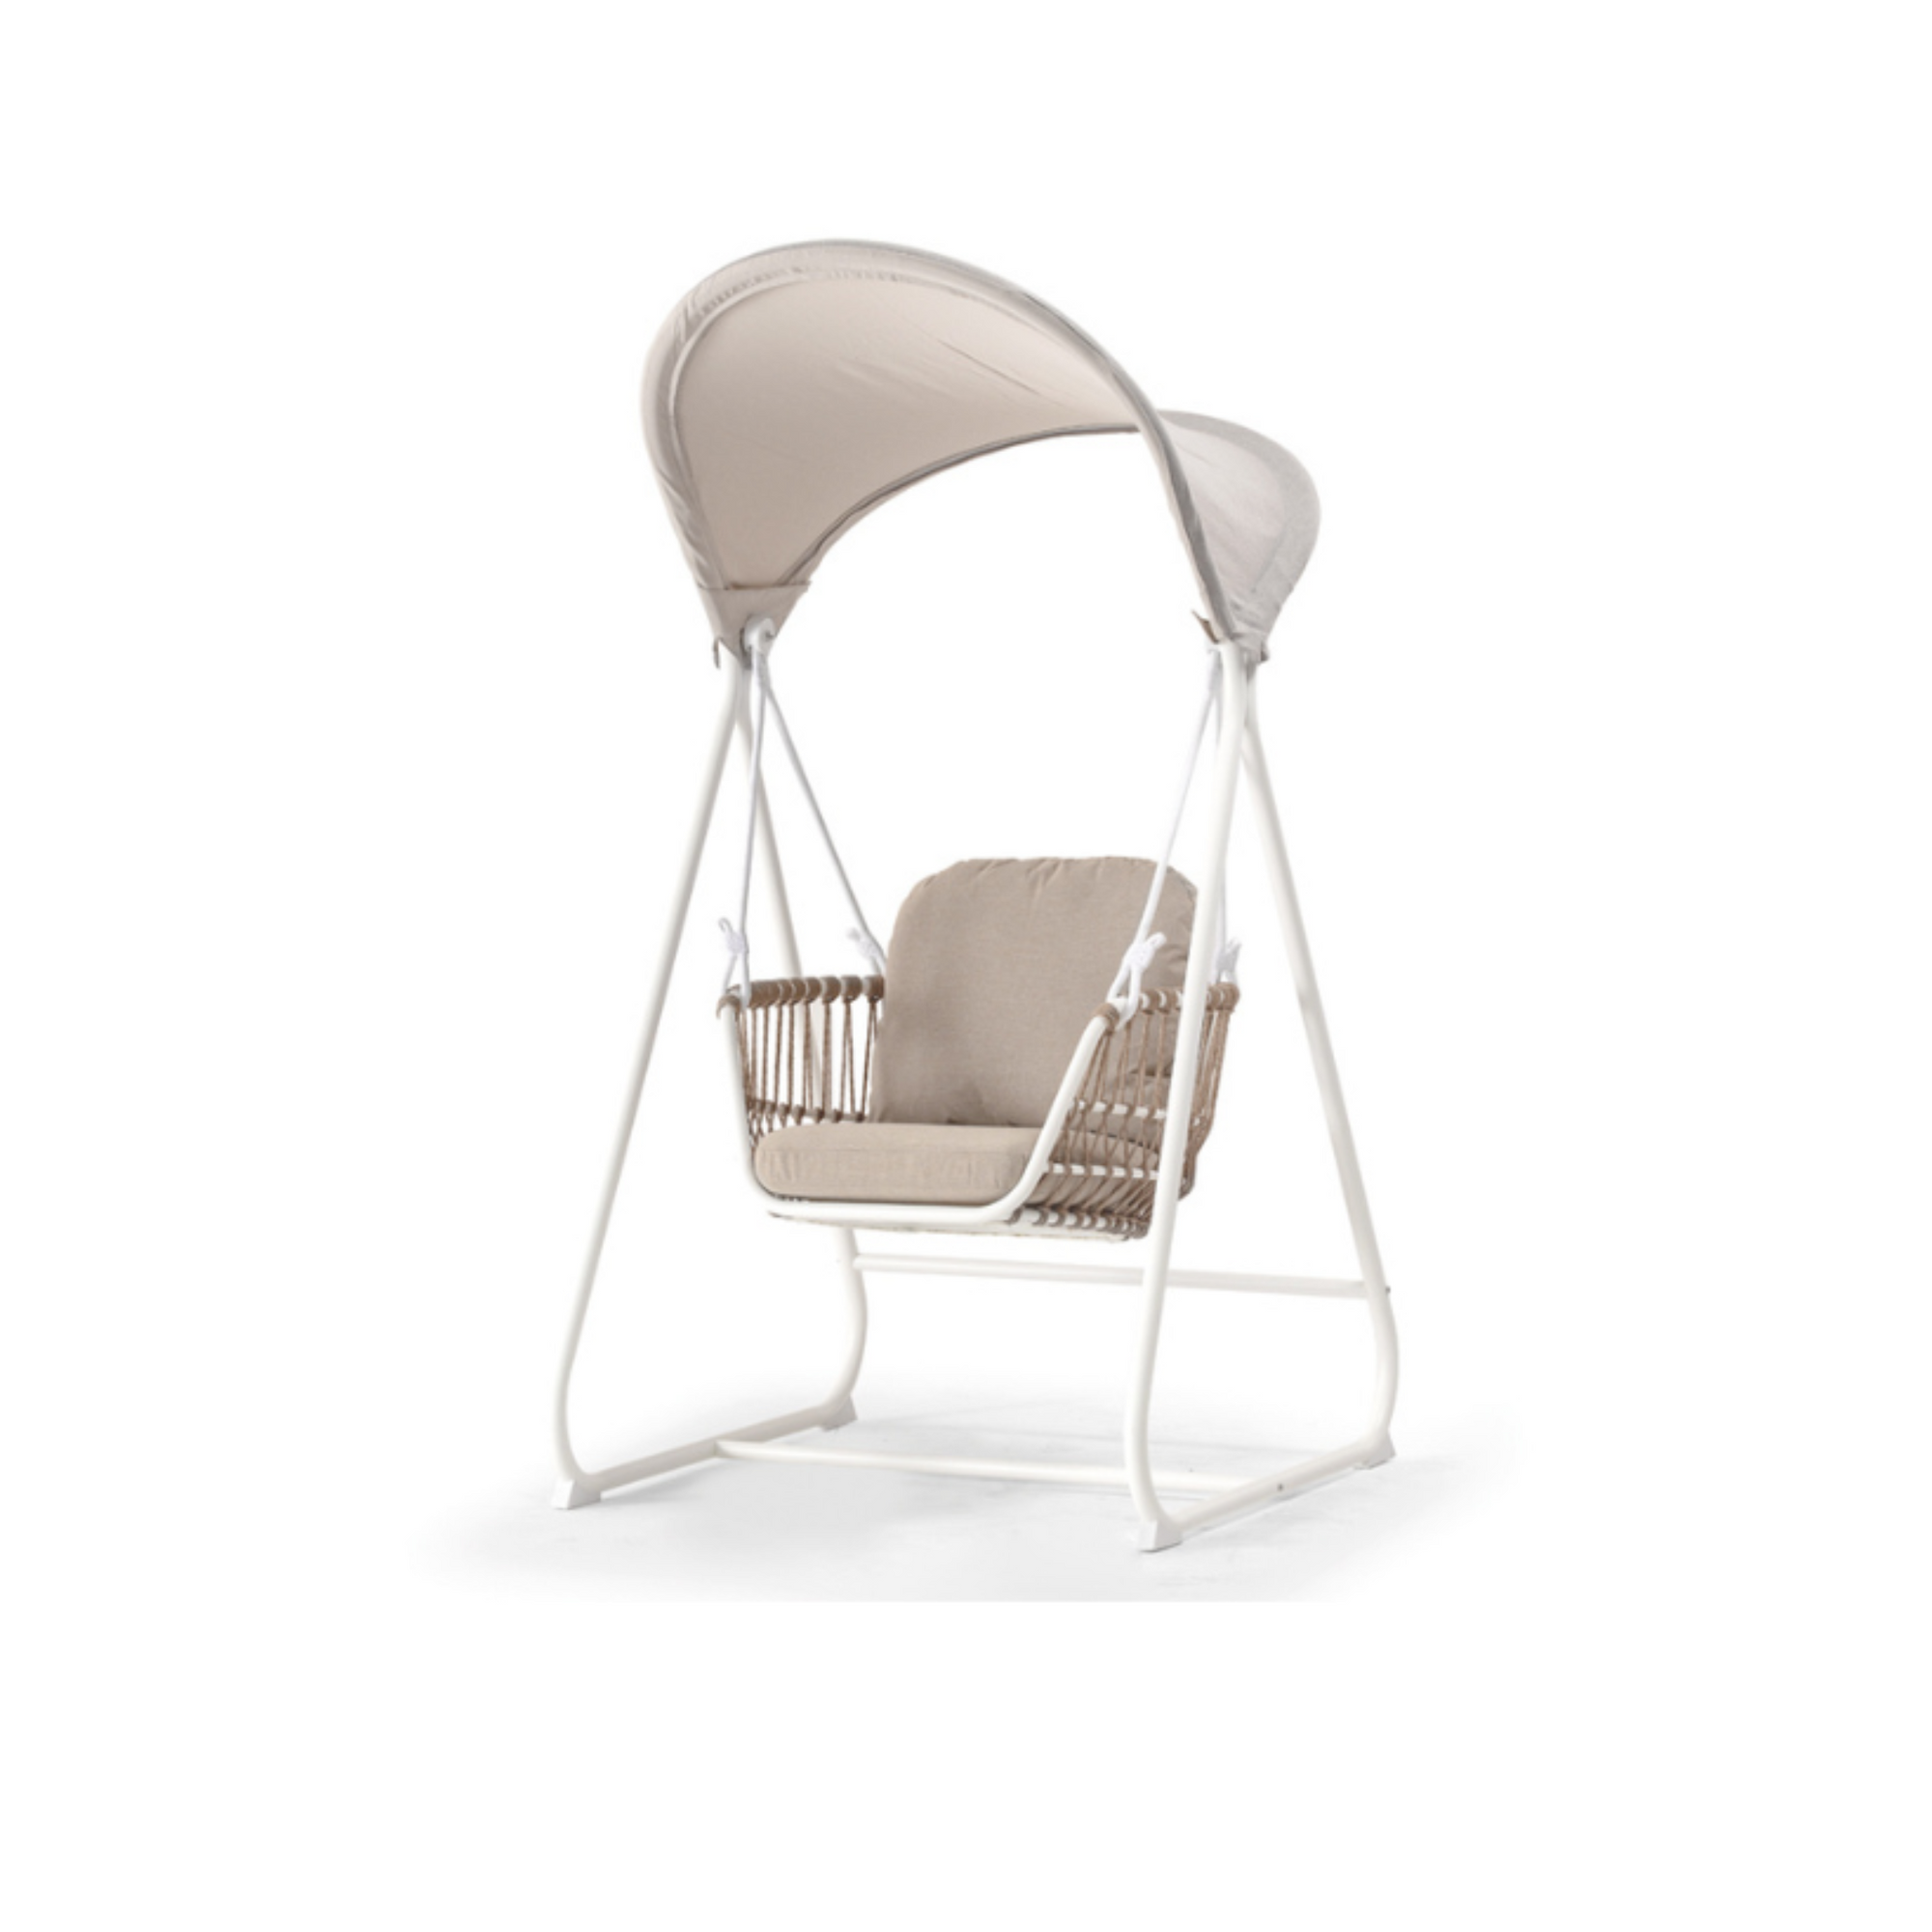 Deneb Rocking chair